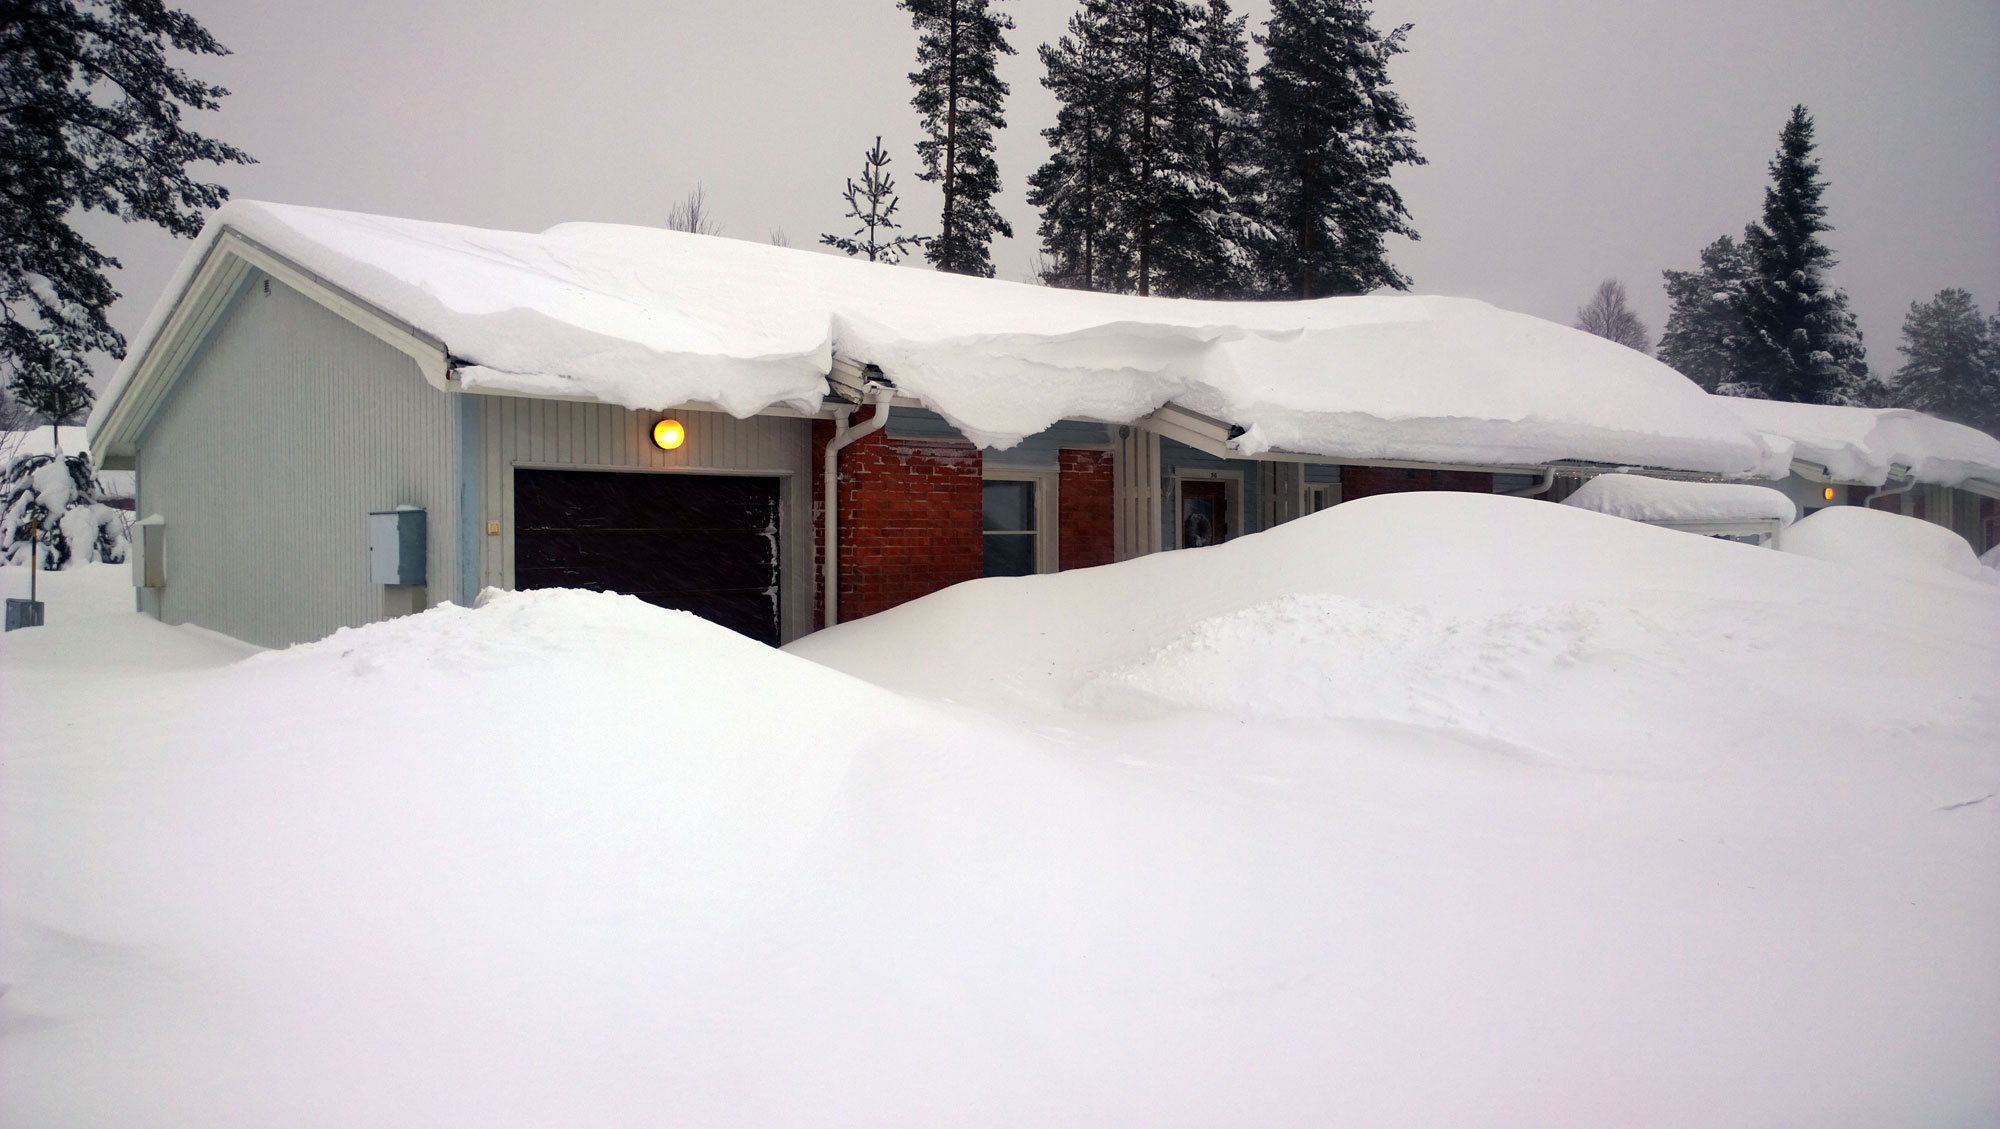 Imaginary Karin - snowstorm January 2015